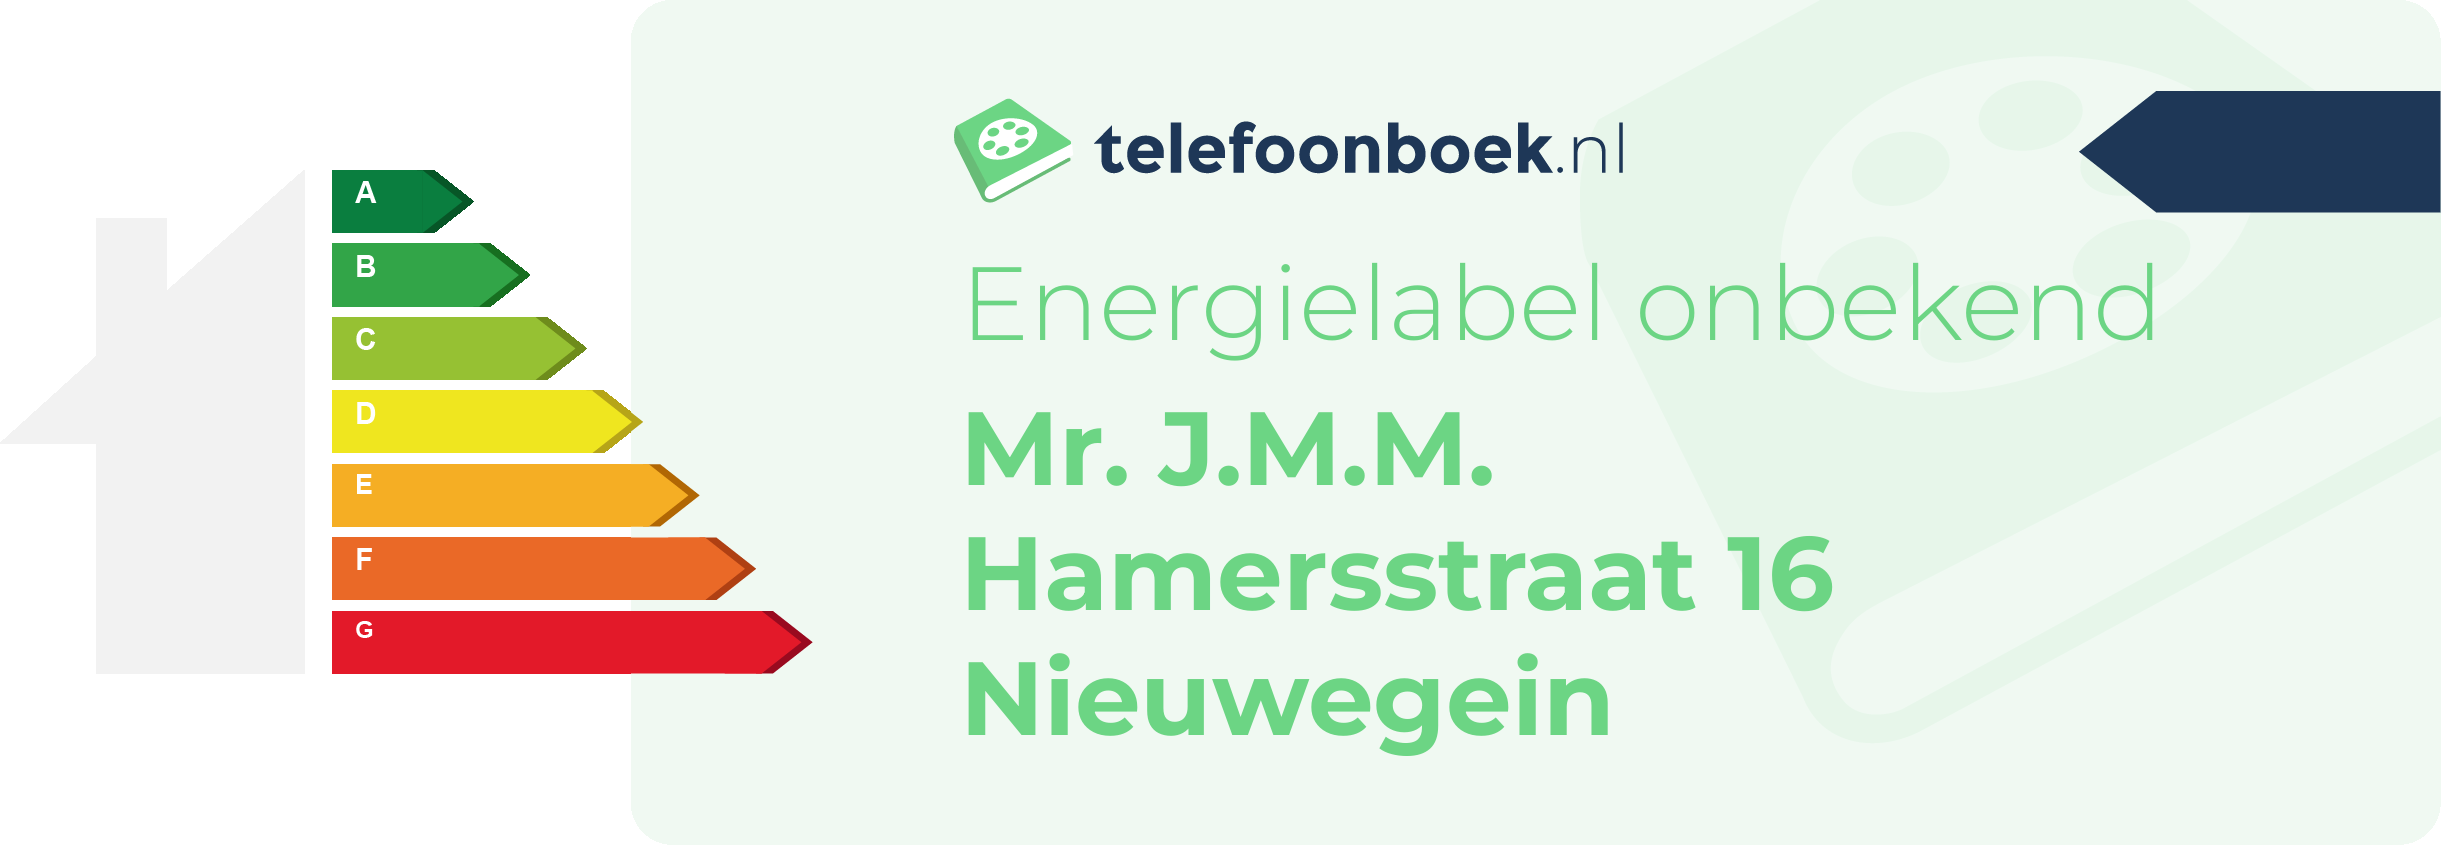 Energielabel Mr. J.M.M. Hamersstraat 16 Nieuwegein